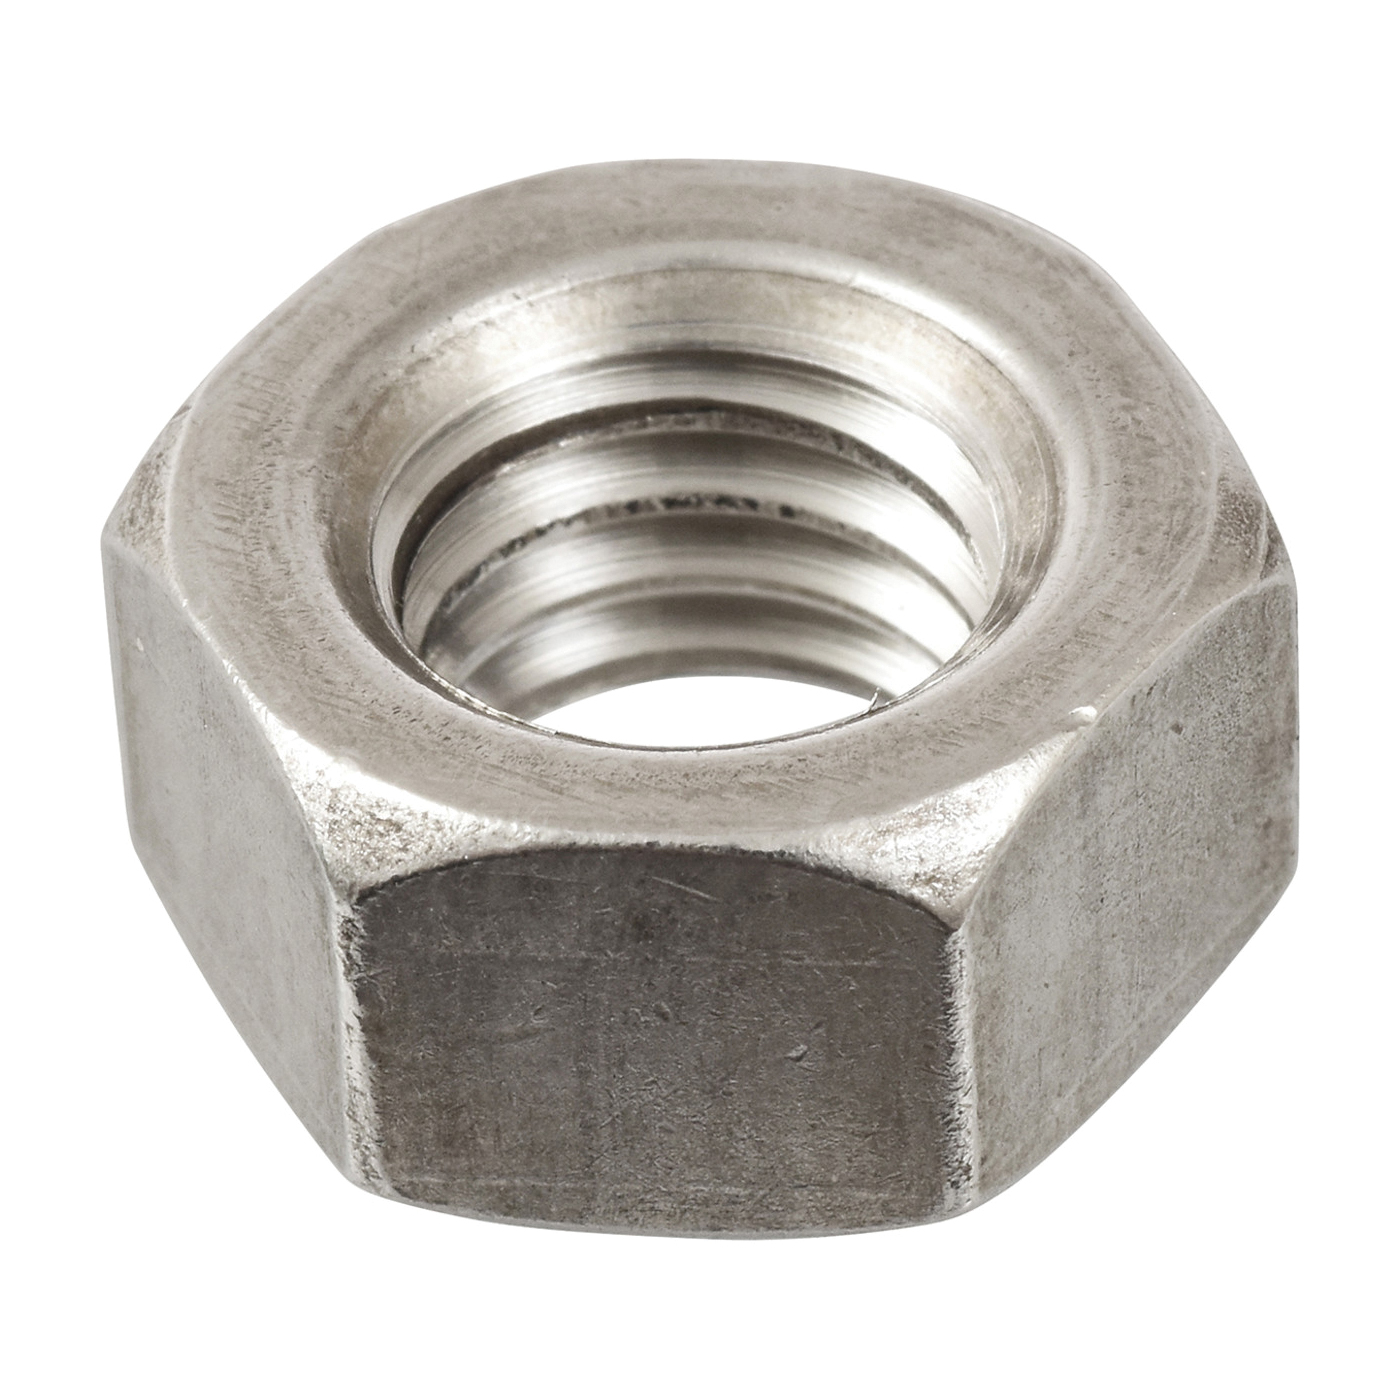 881159 Hex Nut, 4-40 Thread, Stainless Steel